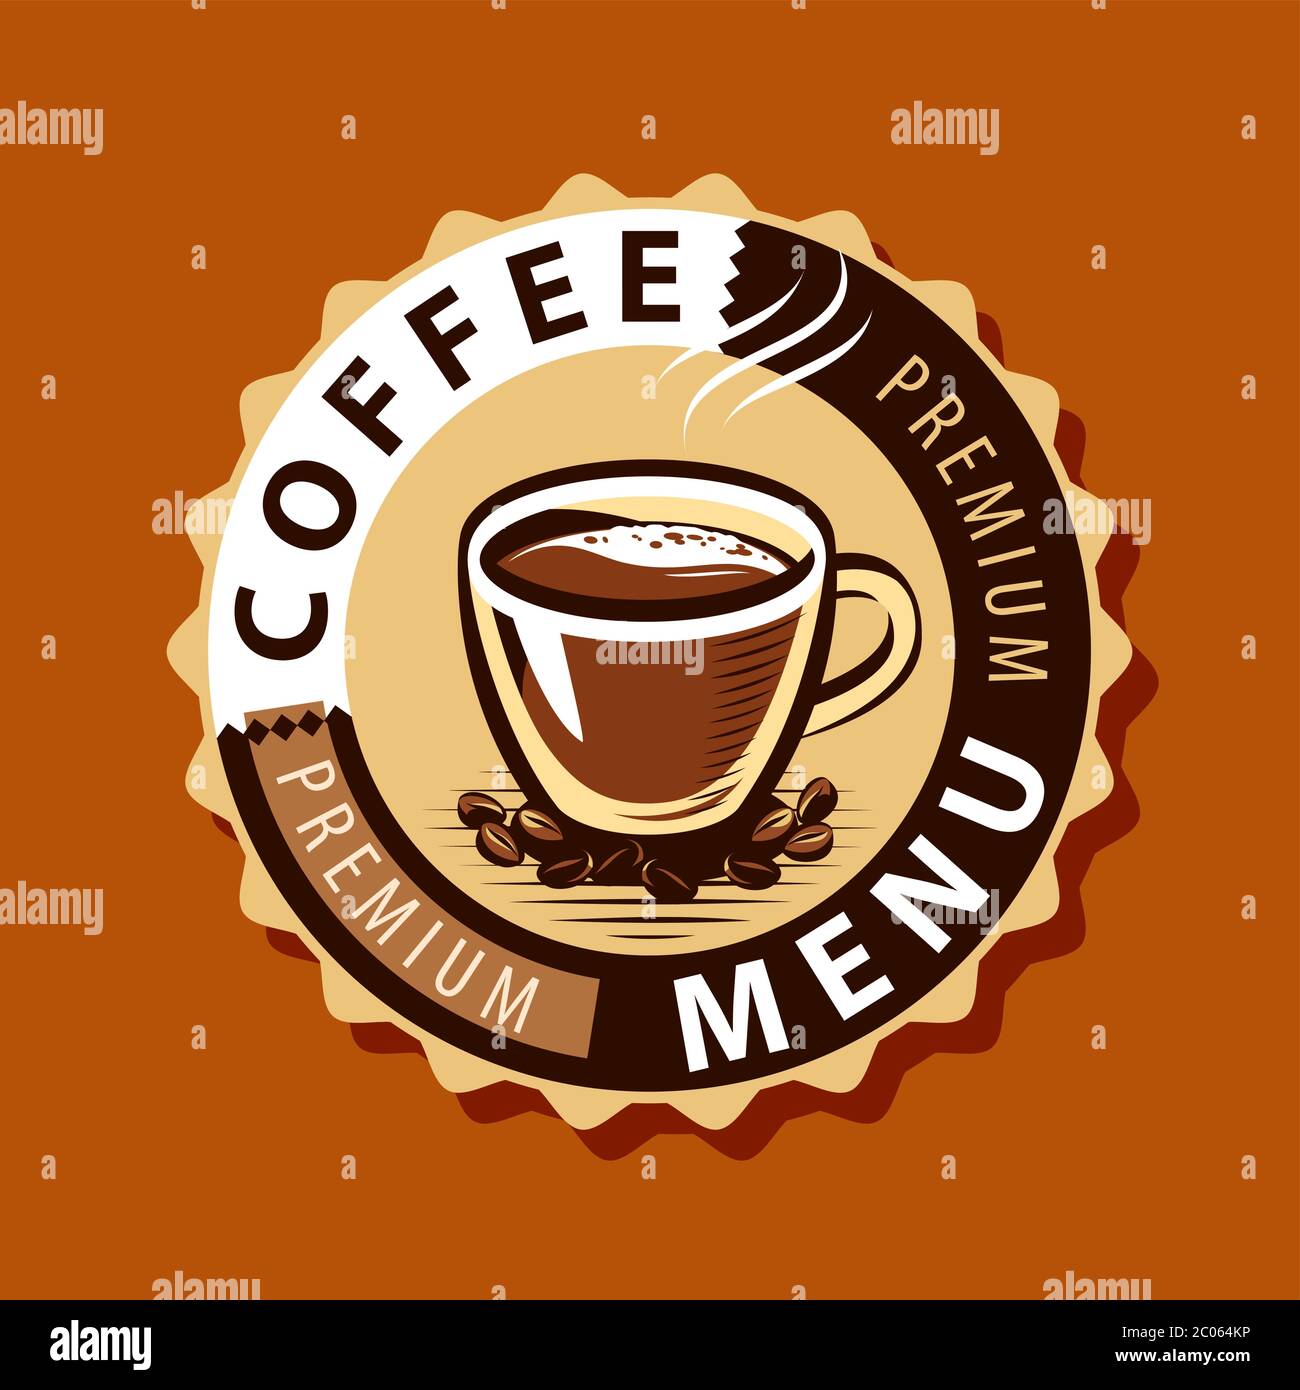 Coffee logo or label. Menu design for cafe and restaurant. Vector illustration Stock Vector